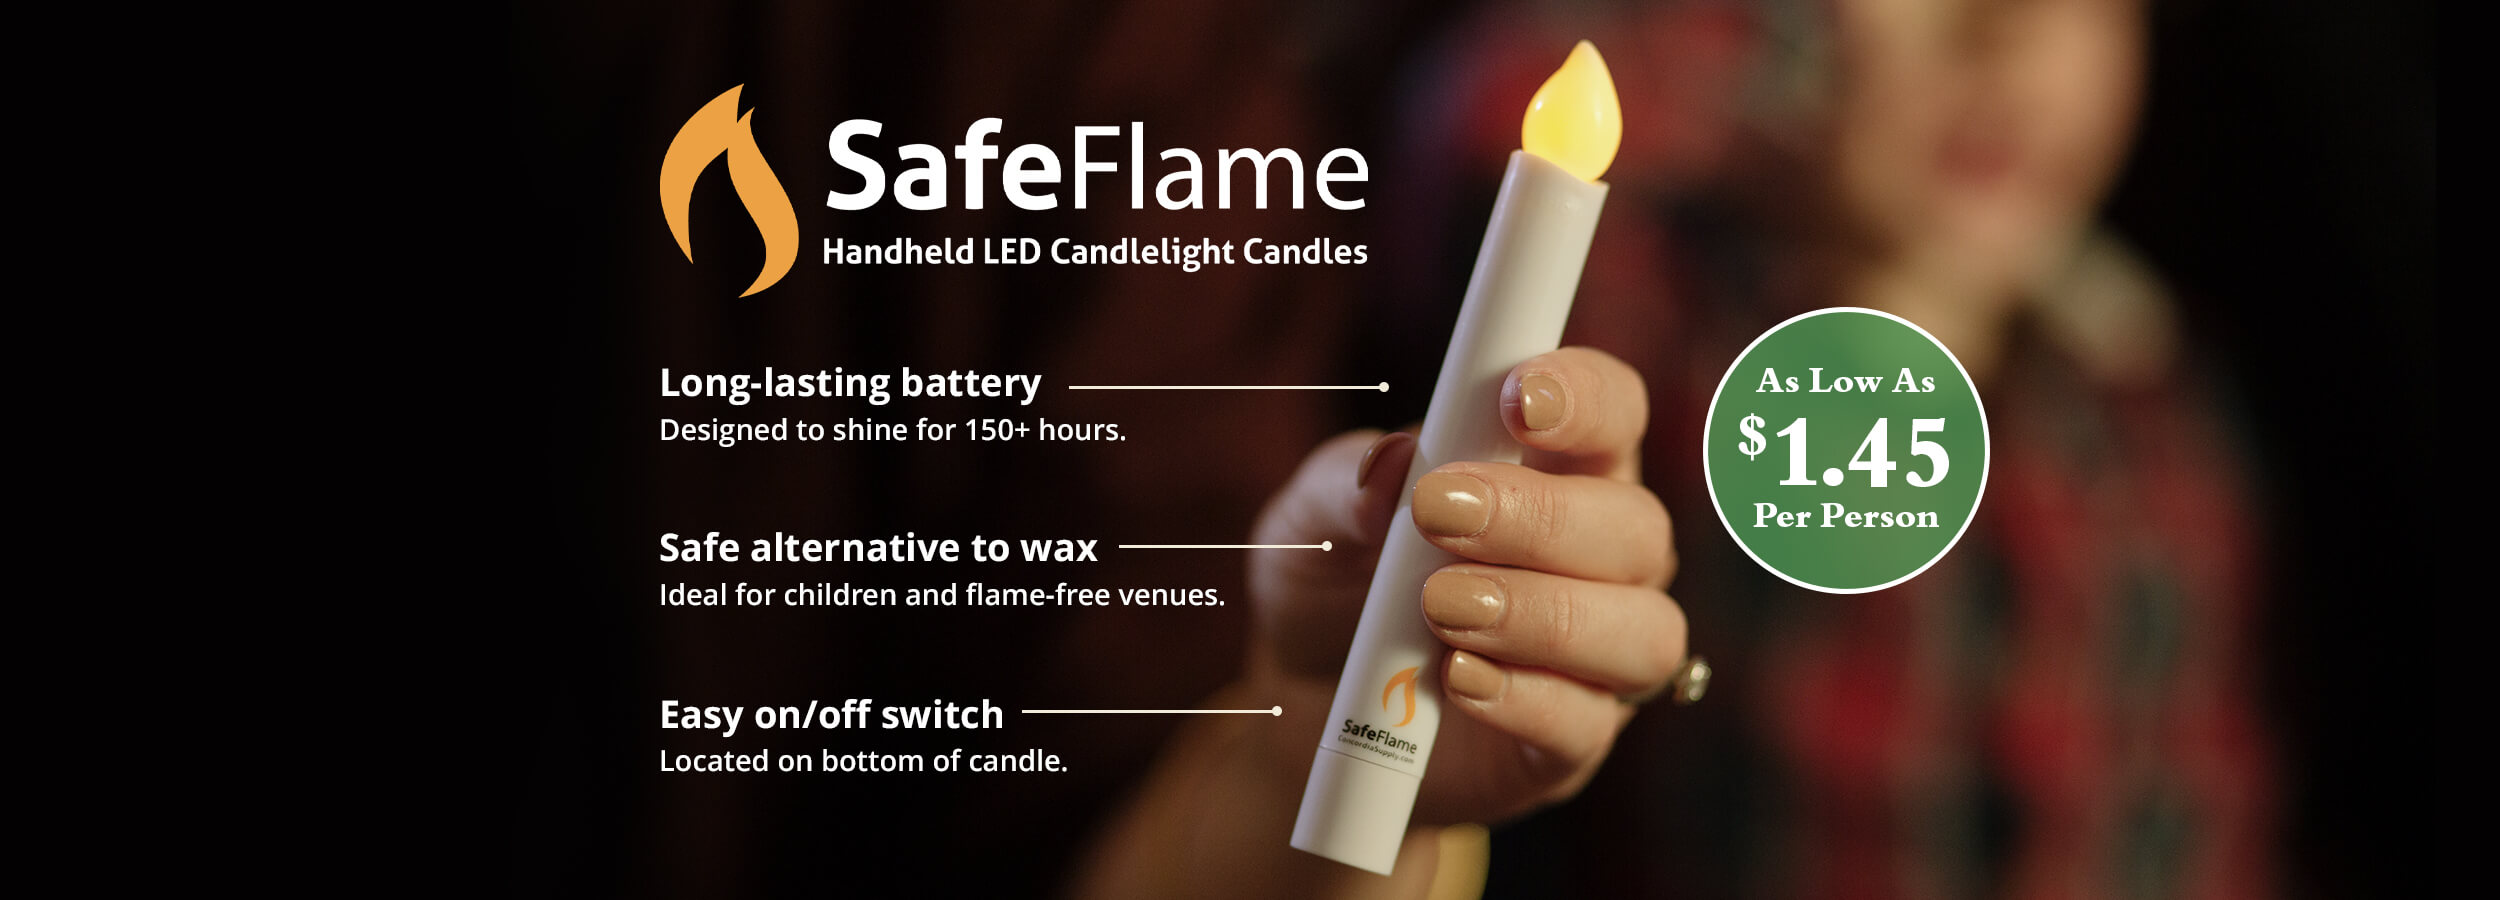 Safeflame - Safe alternative to wax